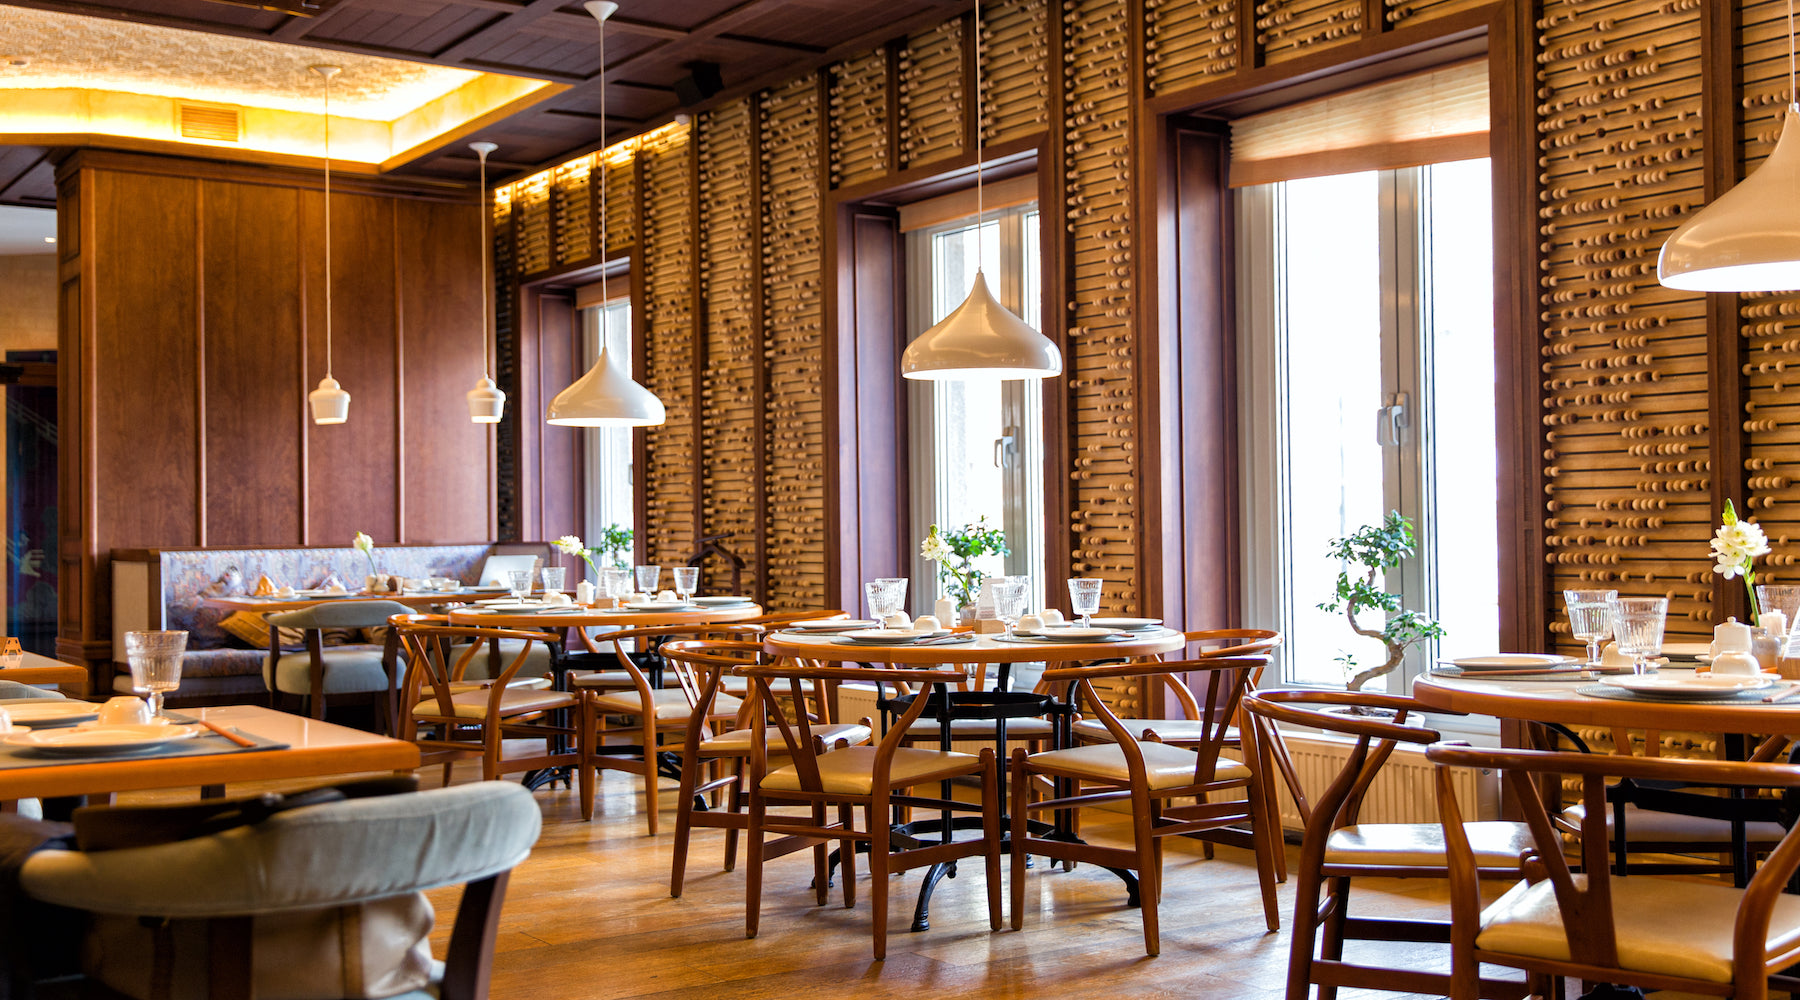 Restaurant lighting shown installed inside of a Chinese restaurant